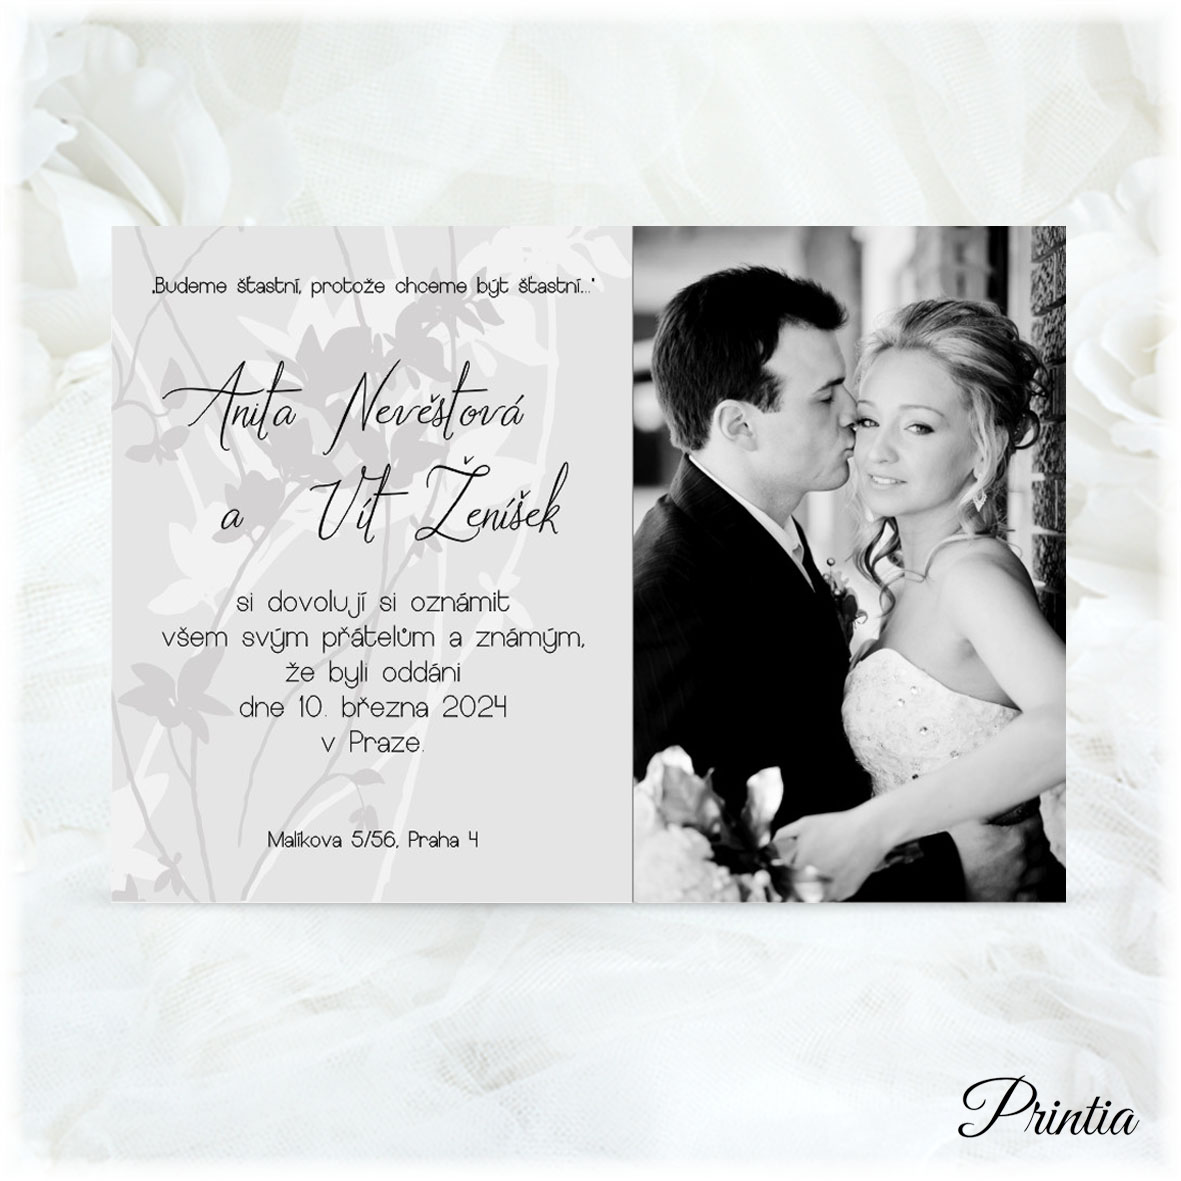 Wedding invitation with photo in gray shades